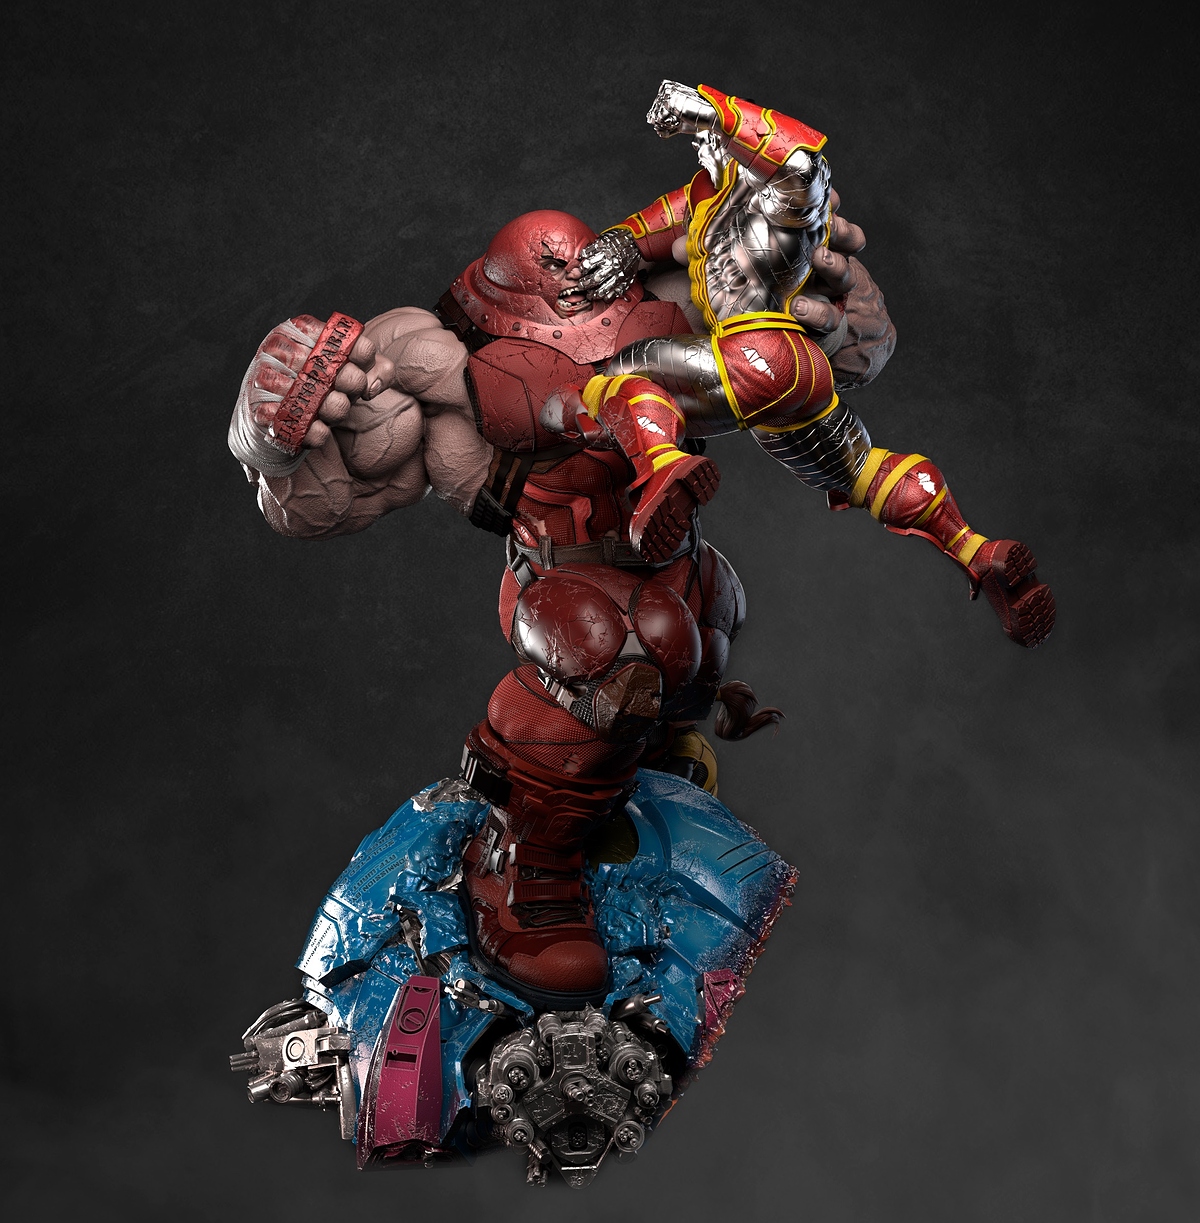 juggernaut vs colossus - image5